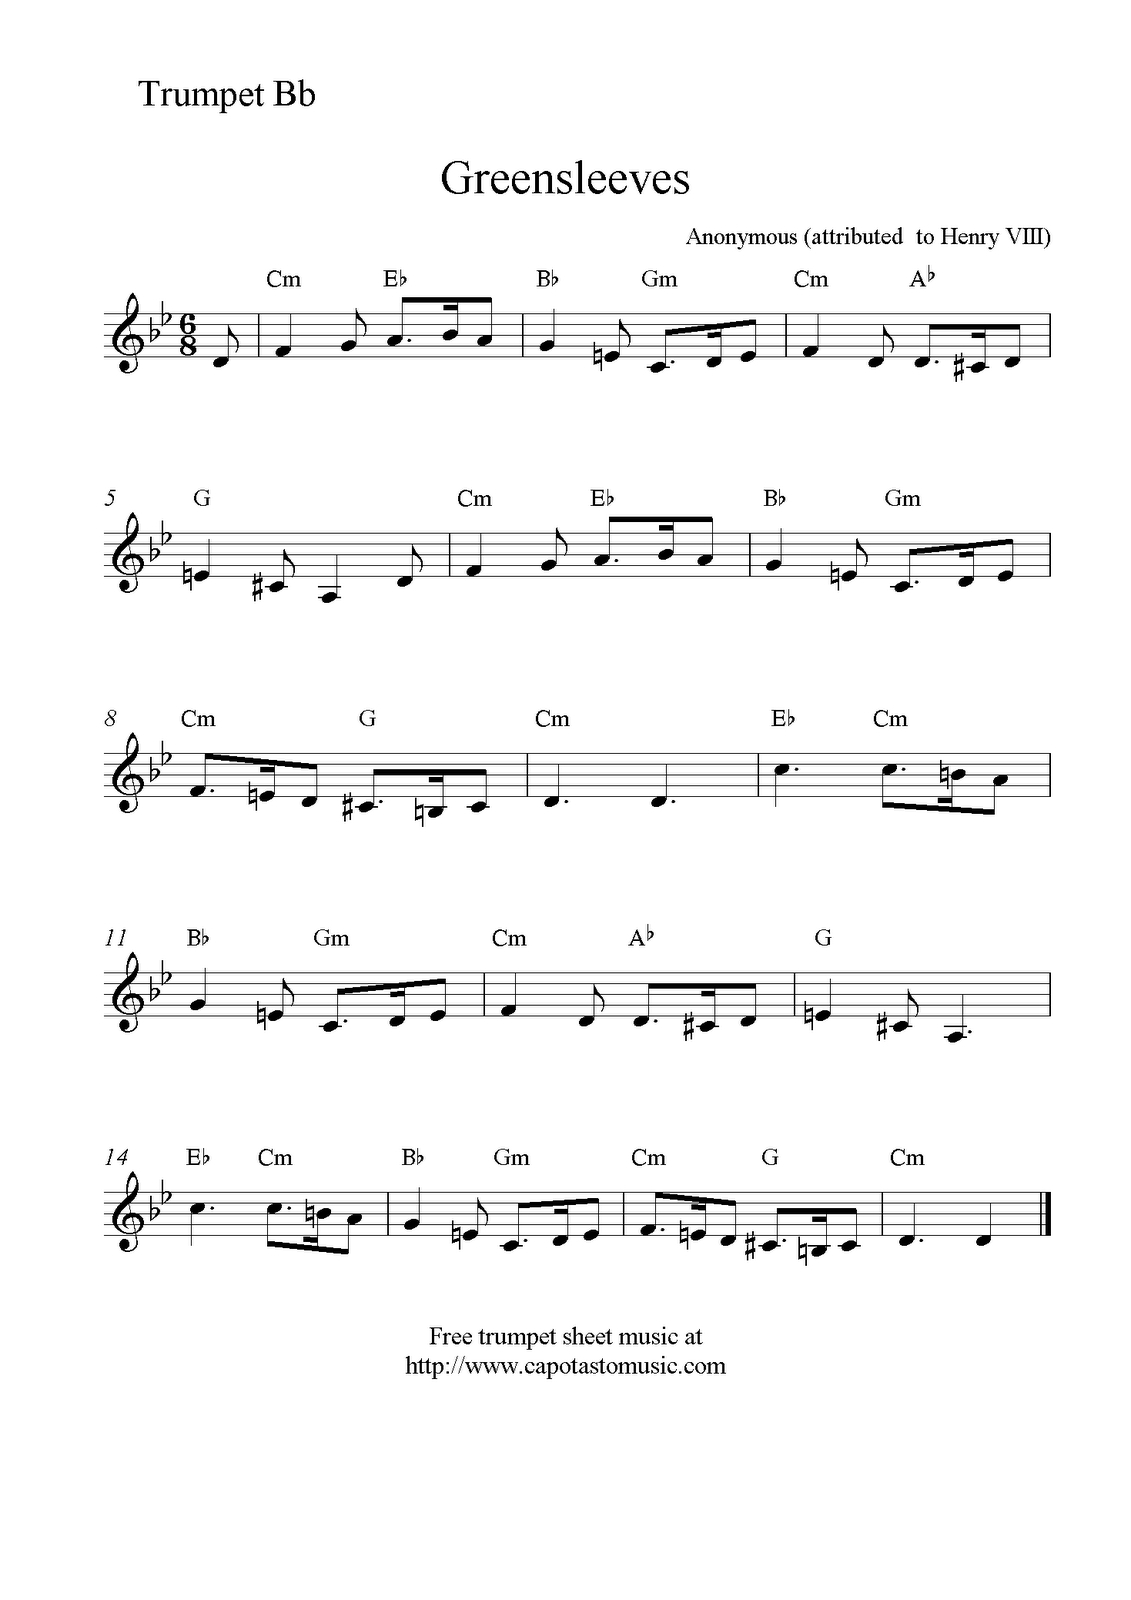 Greensleeves, Free Trumpet Sheet Music Notes - Free Printable Sheet Music For Trumpet